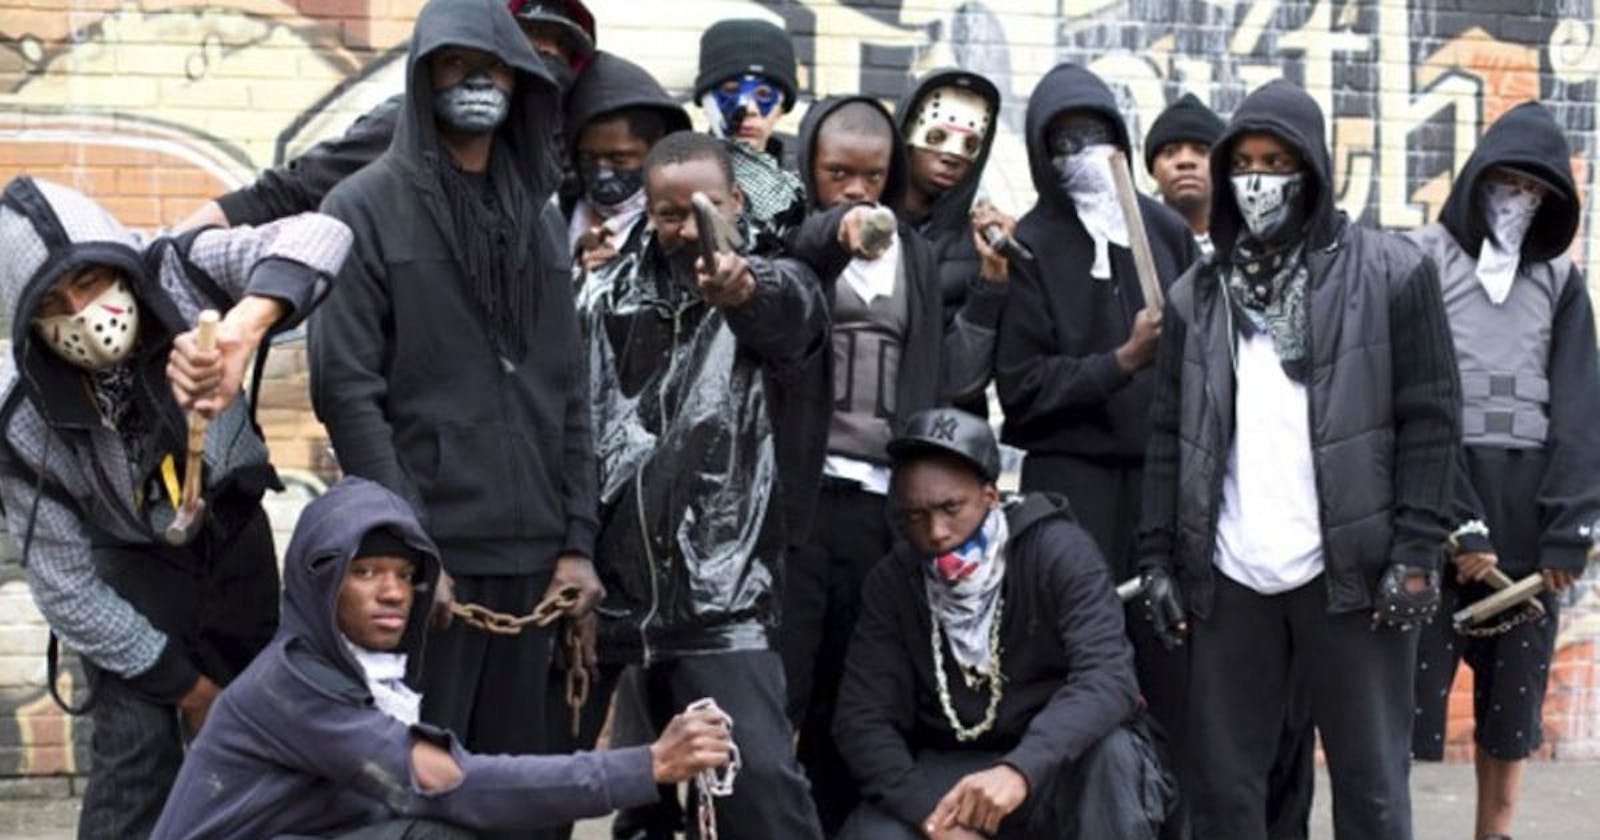 Nine of the most dangerous gangs in the U.S